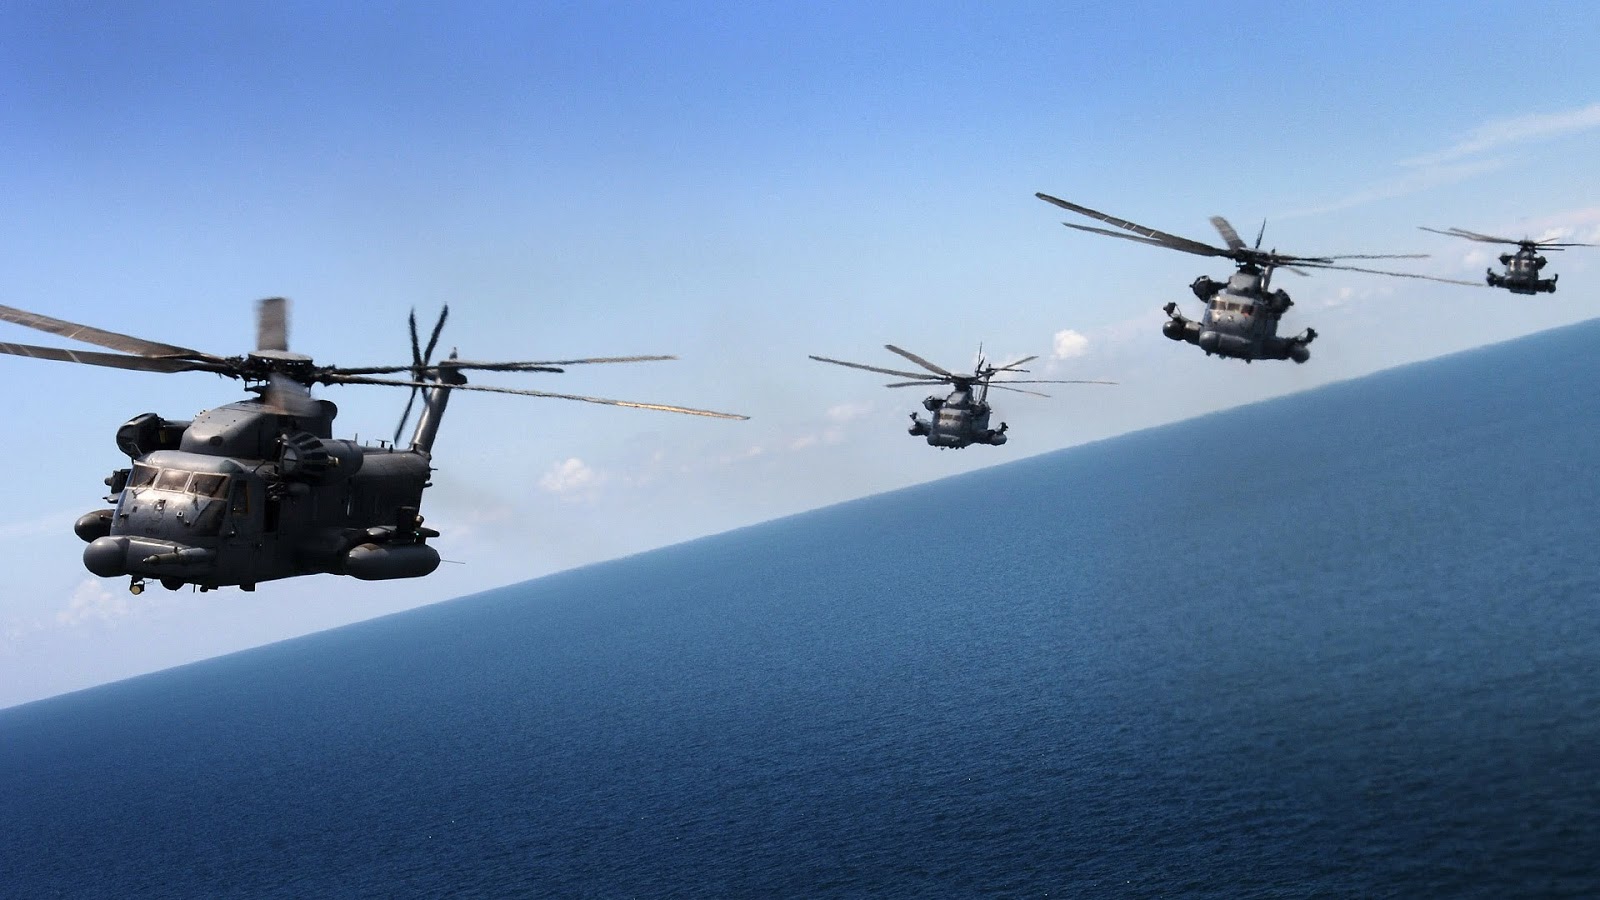  Gambar Helikopter  Yang Sangat Keren Kumpulan Gambar 